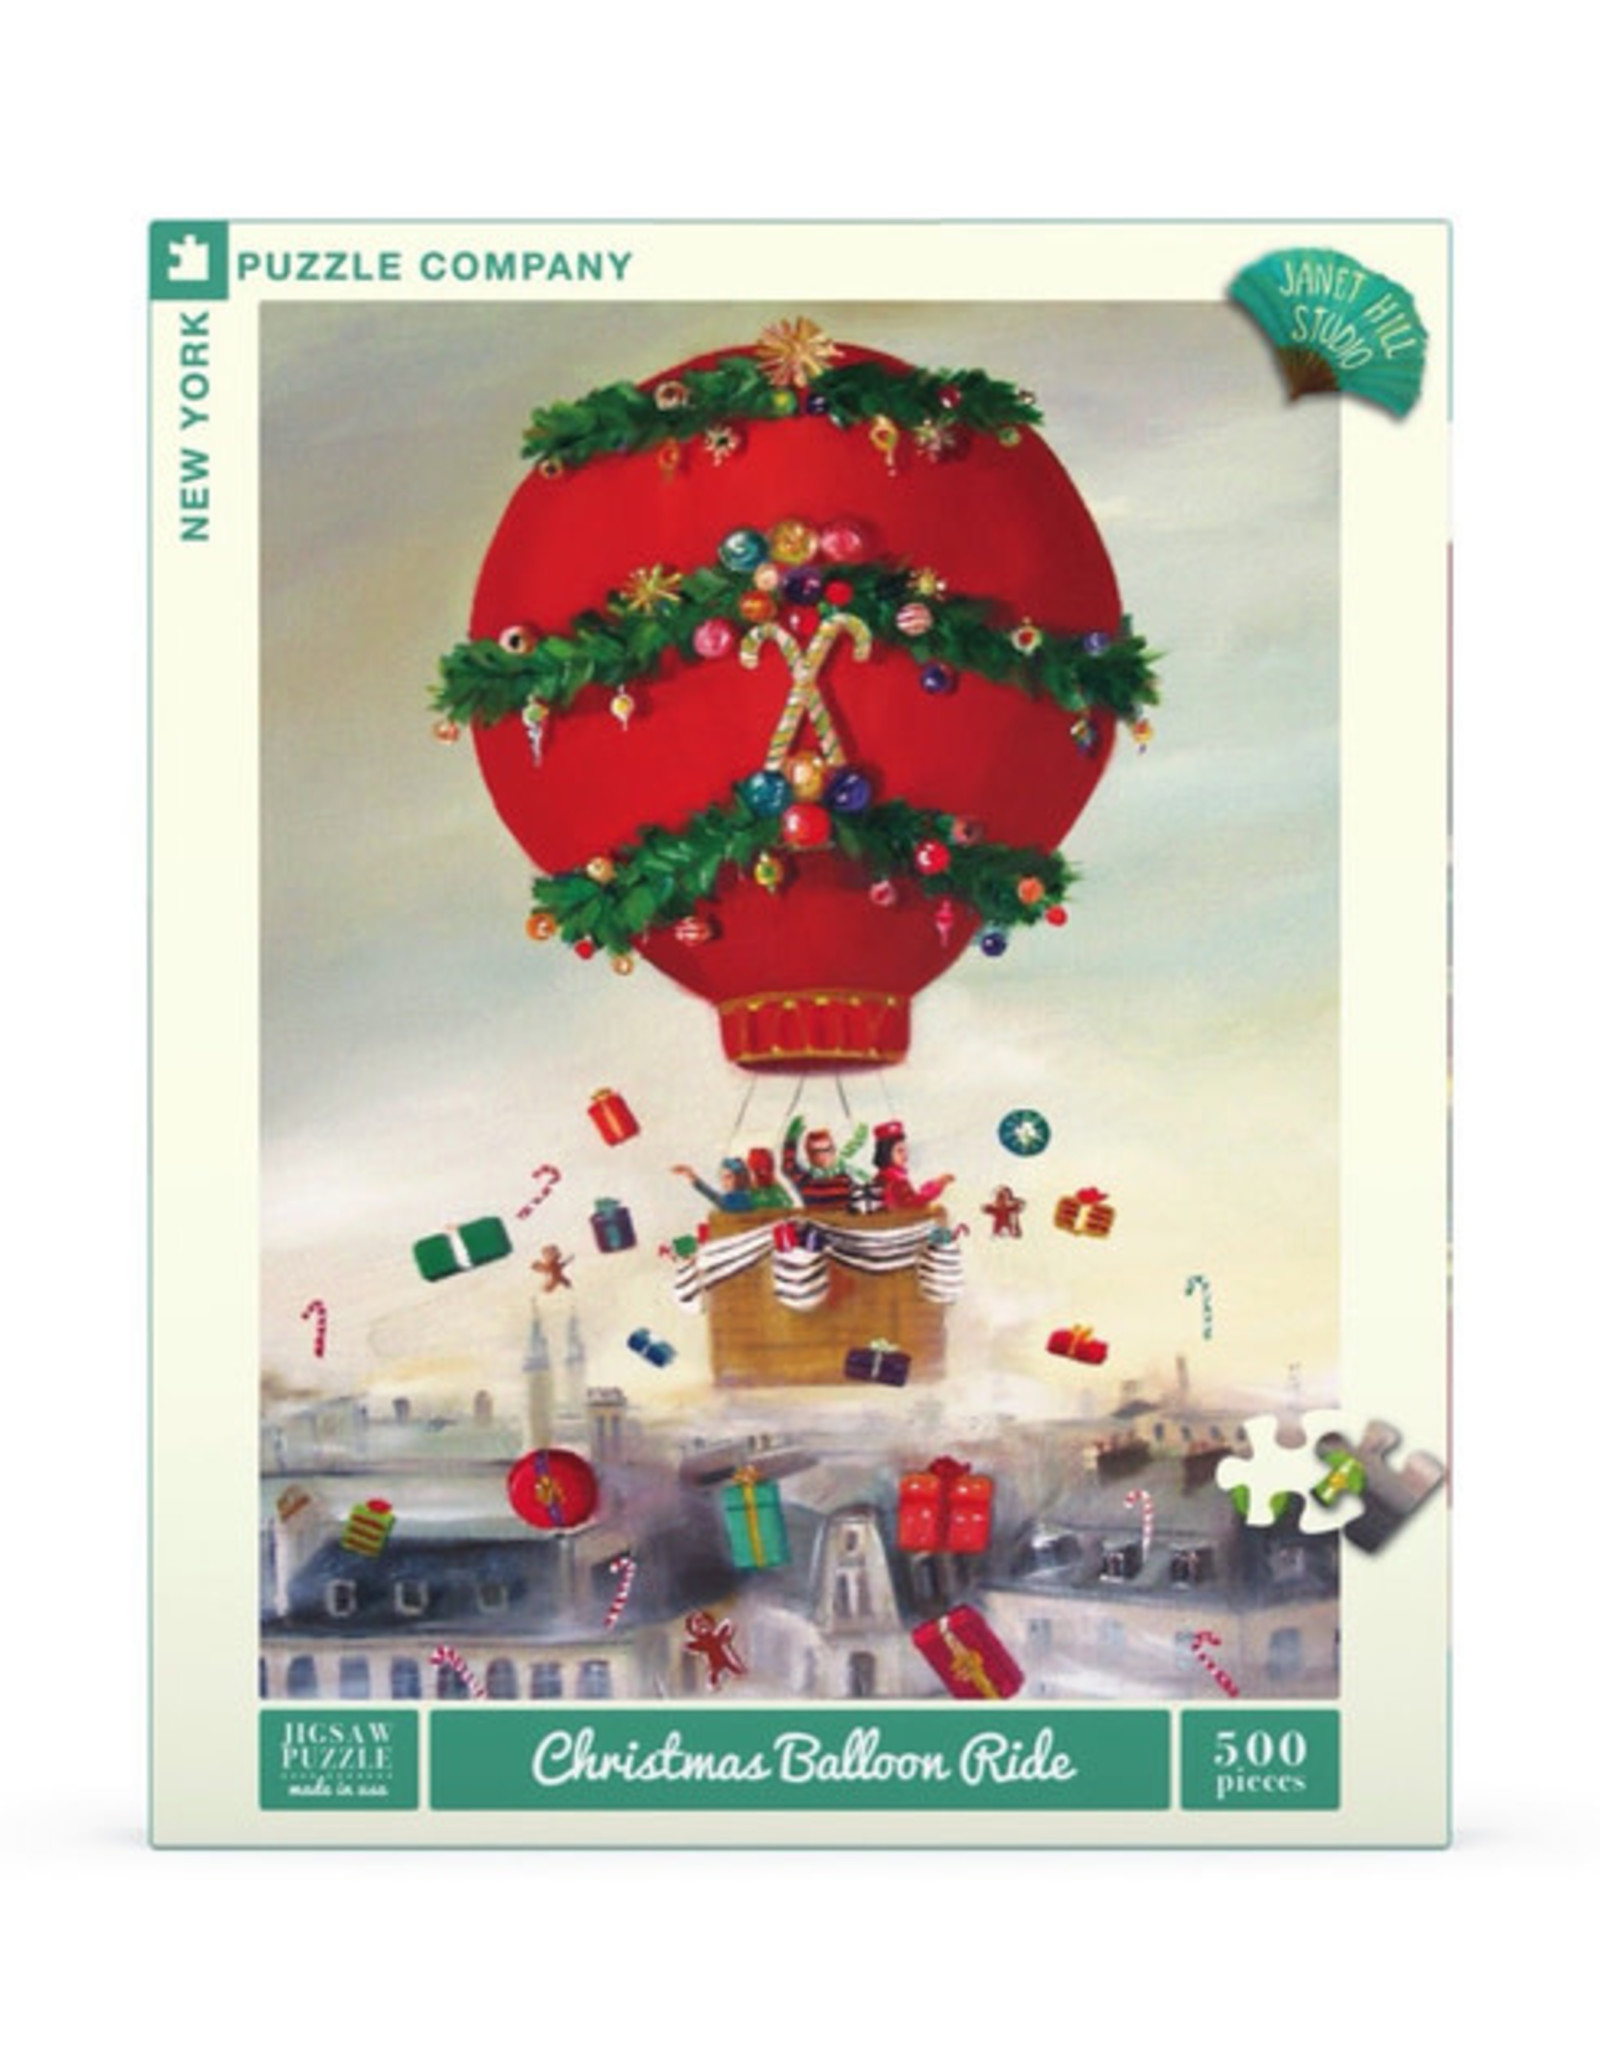 New York Puzzle Company Christmas Balloon Ride 500pc New York Puzzle Company Jigsaw Puzzle